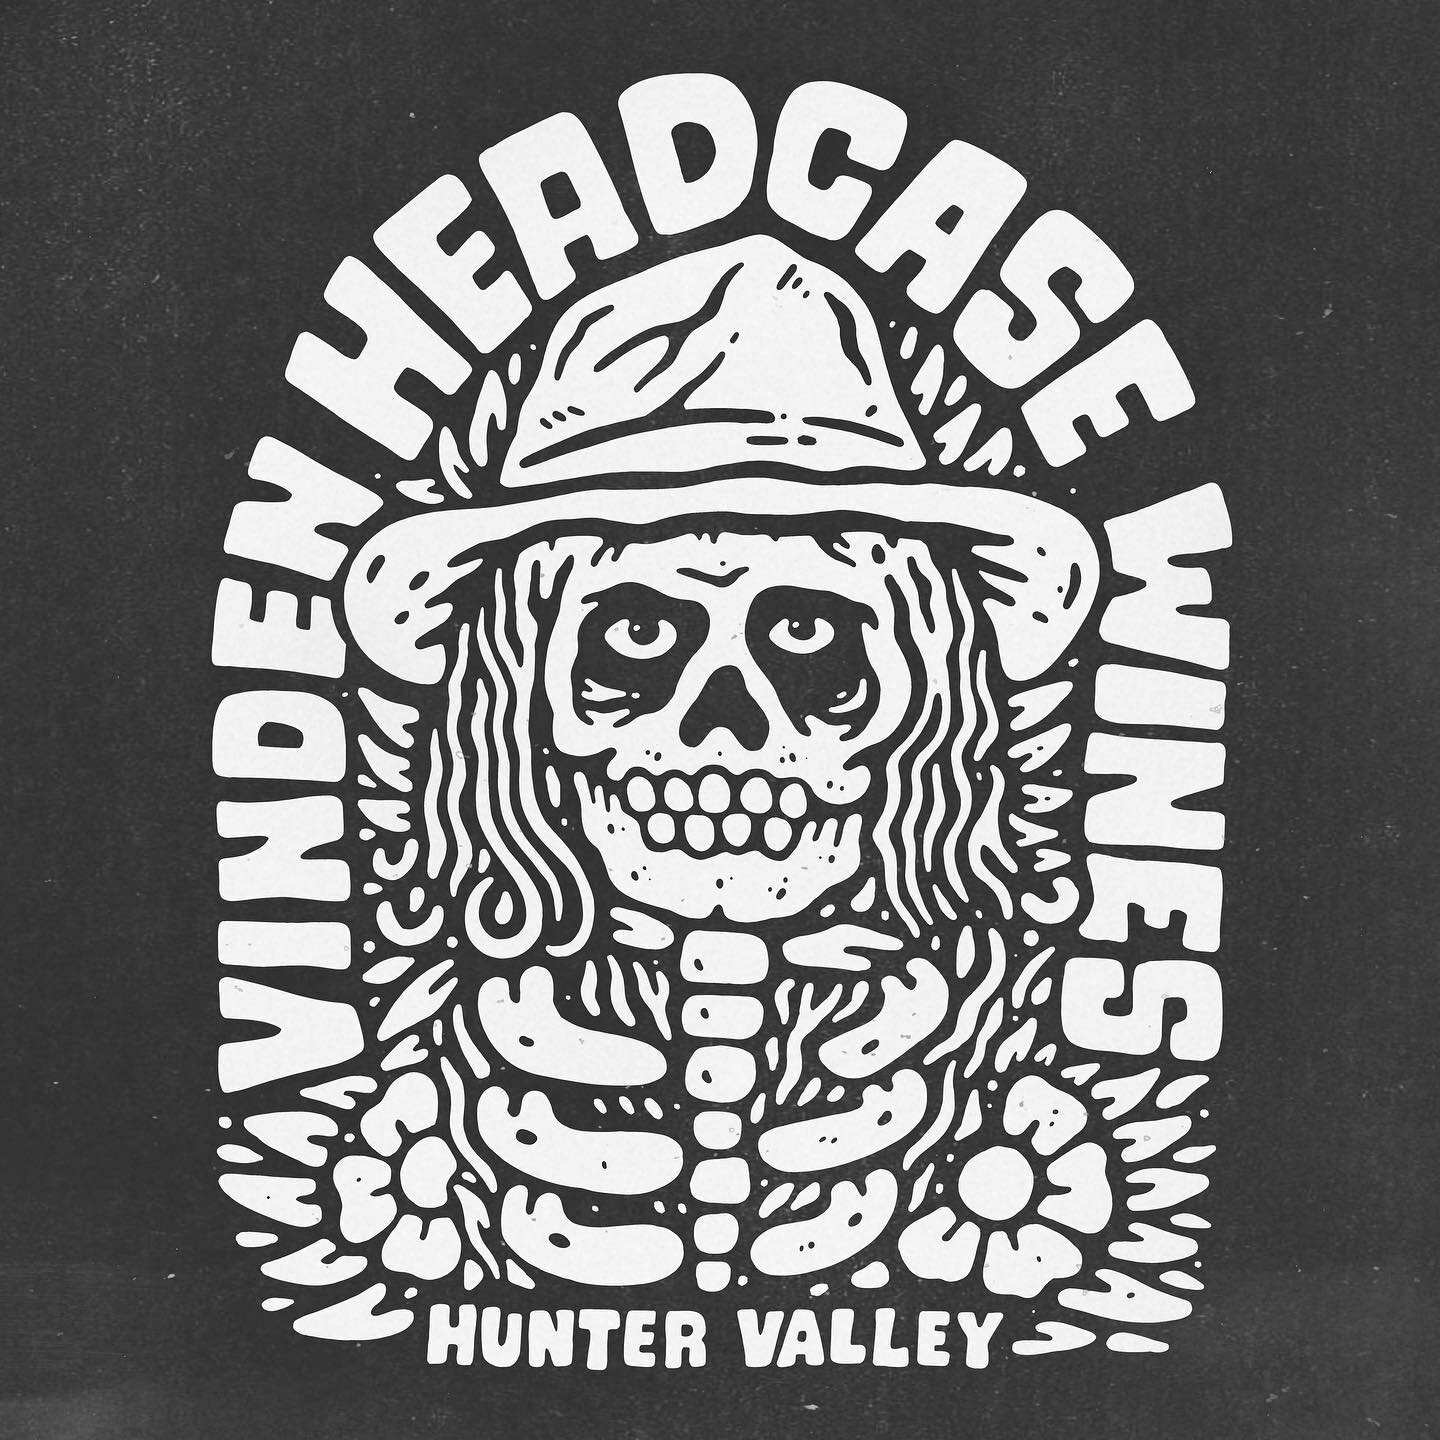 New shirt artwork for the Hunter Valley legends at @vindenwines. Coming soon to their website, grab yourself a a shirt and a bloody good semillon.
-
www.sindysinn.com.au
#sindysinn #vindenwines #angusvinden #huntervalley #pokolbin #semillon #headcase